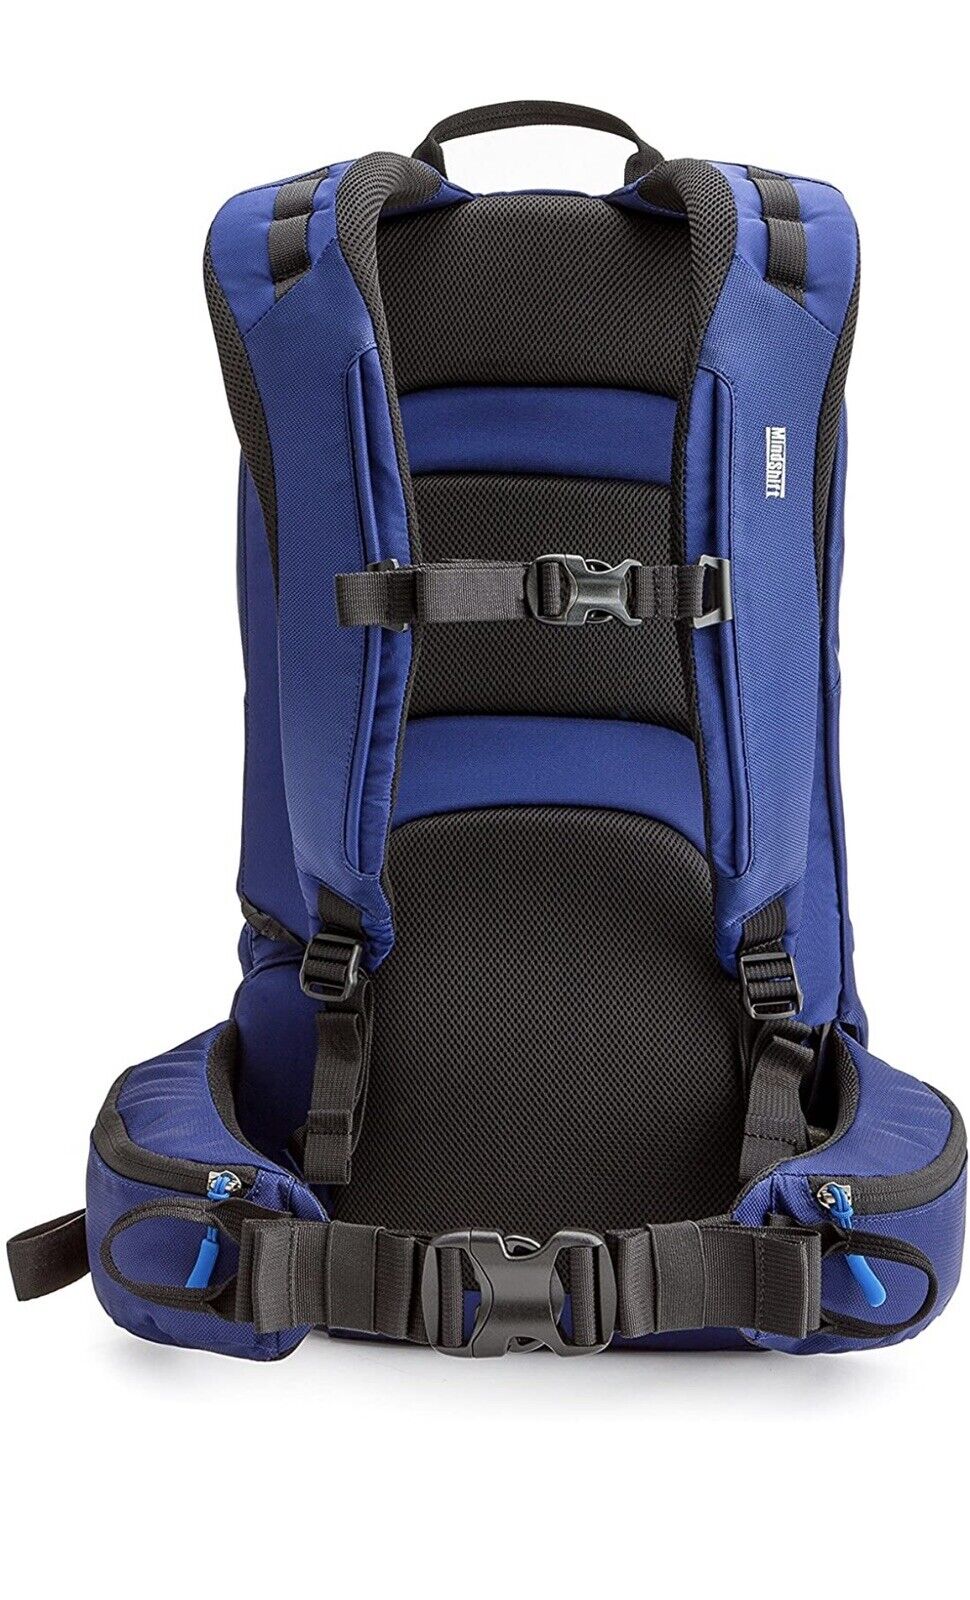 MindShift Roation180° Travel Away Backpack with rotating belt